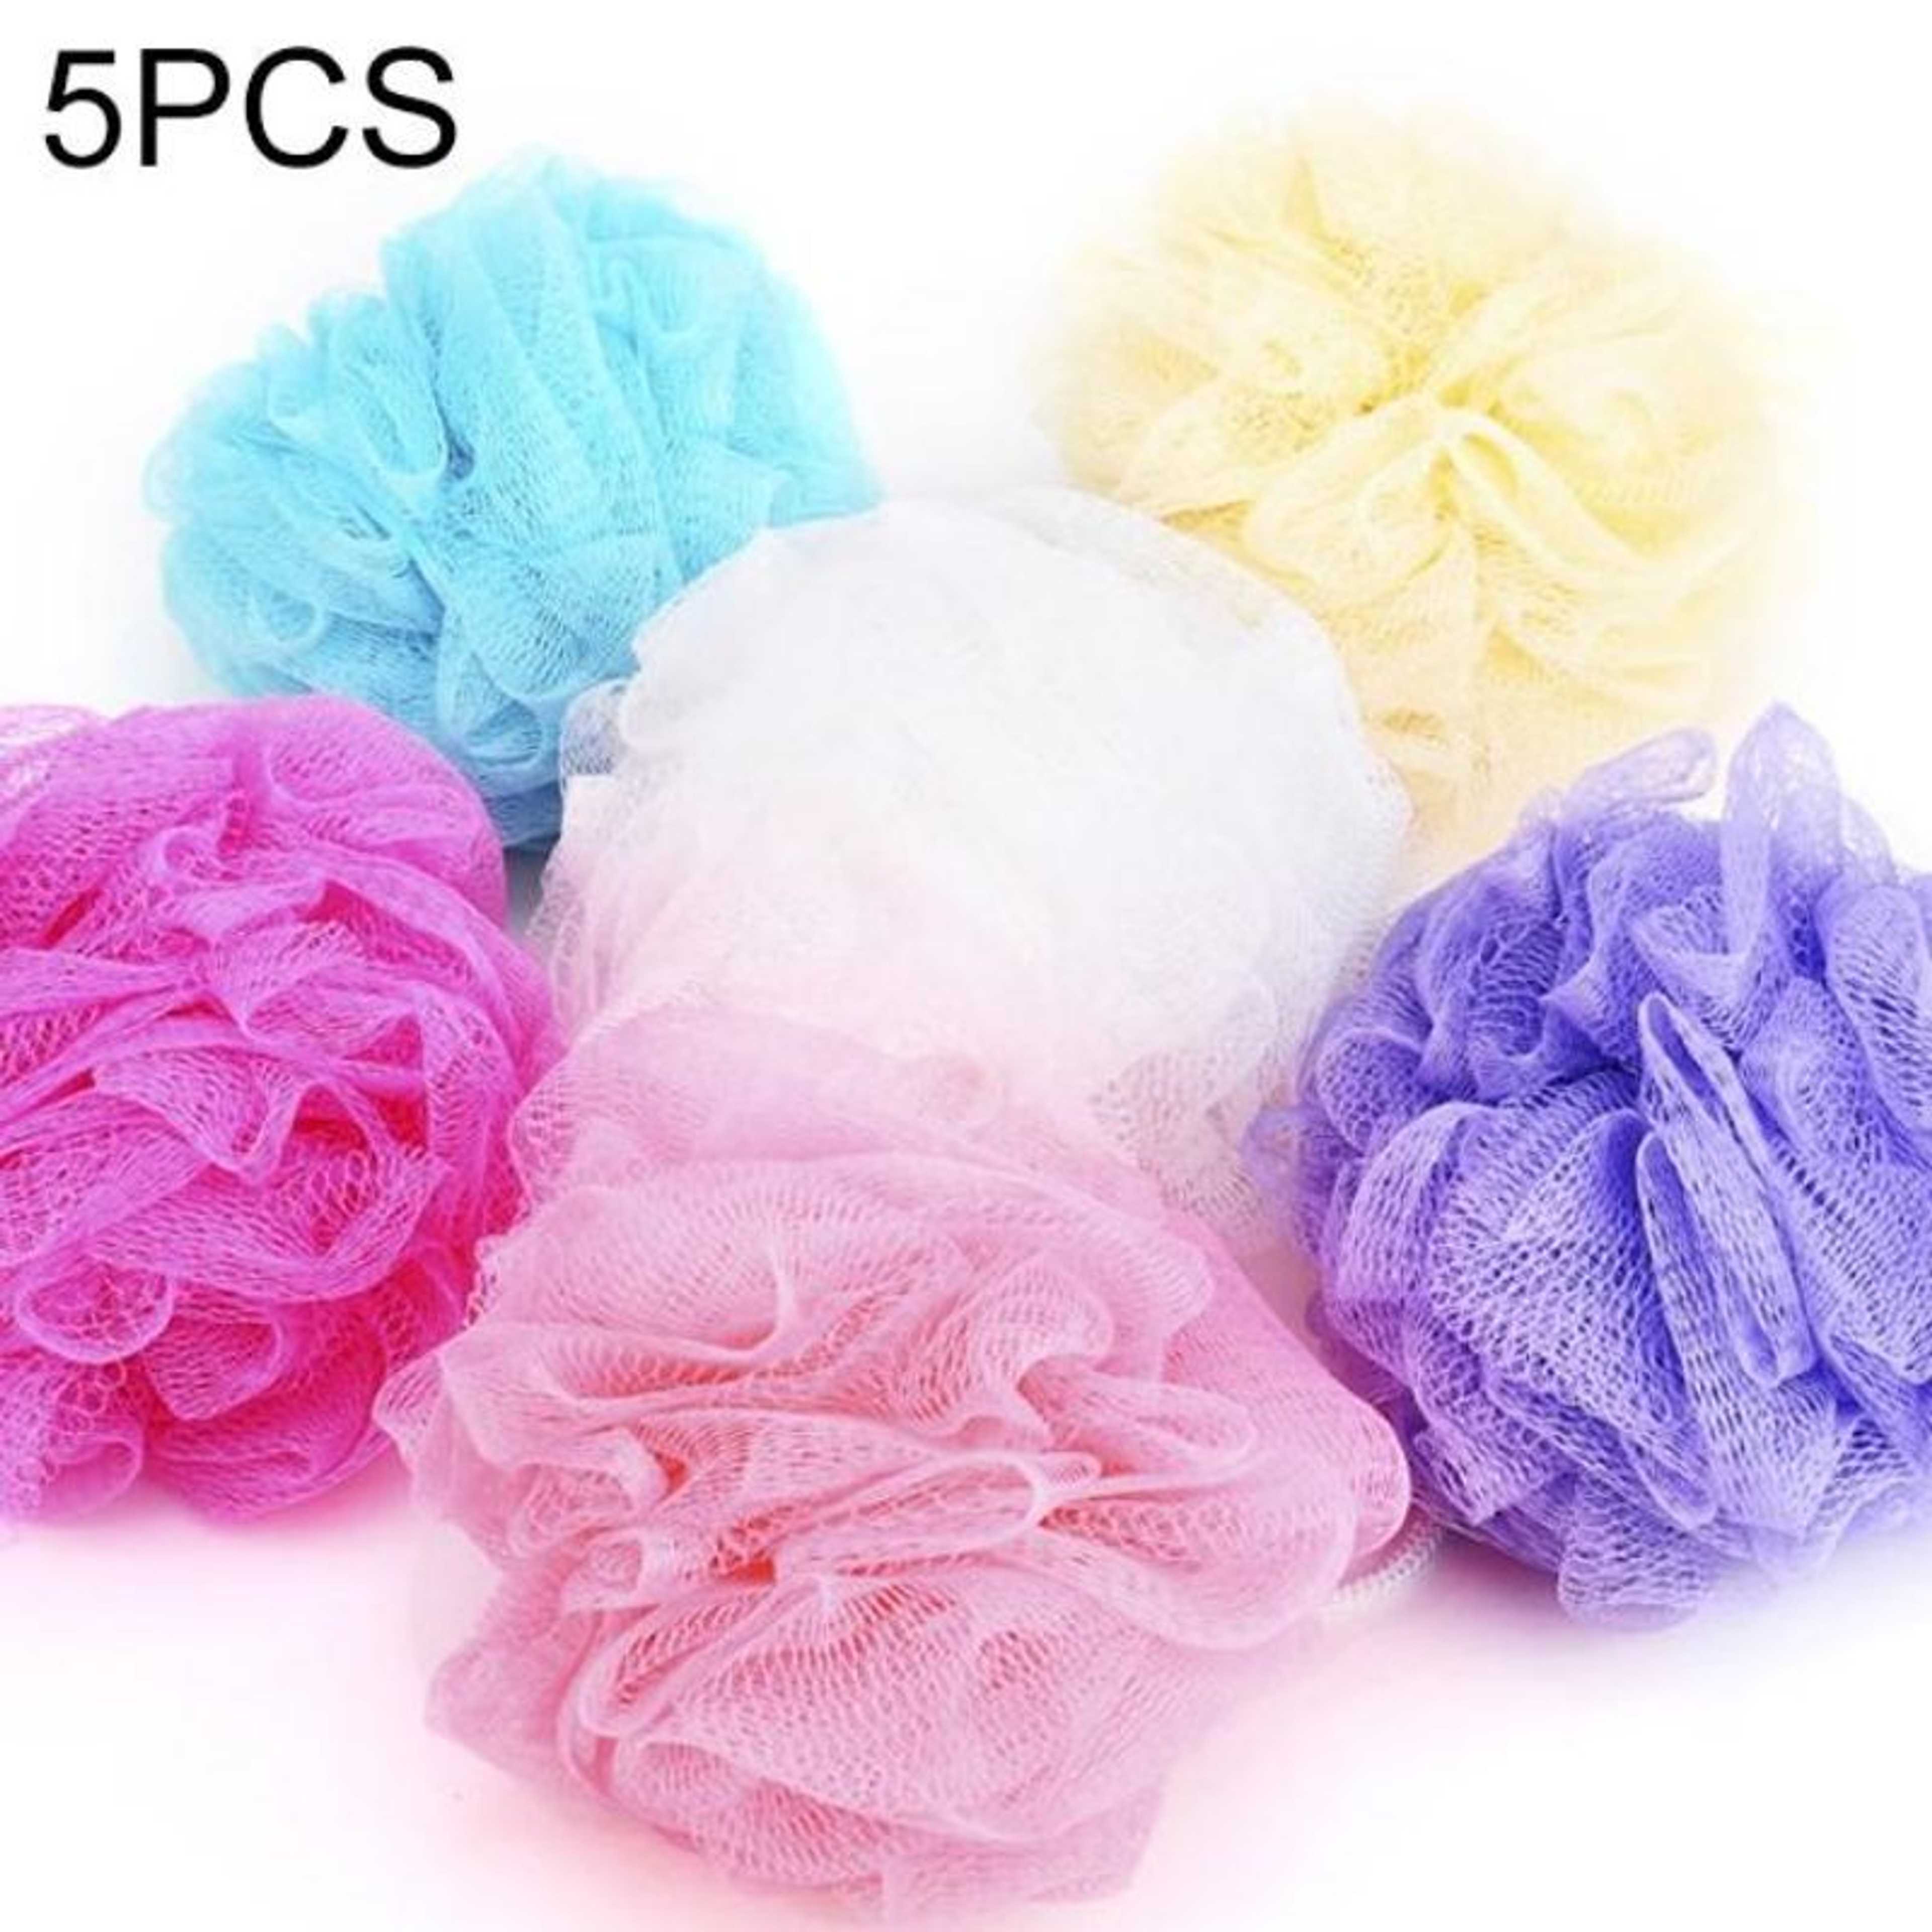 5 PCS Body Cleaning Sponge Random Color Loofah Flower Bath Ball Mesh Shower Nylon Scrubber Mesh Net Ball Exfoliating Shower